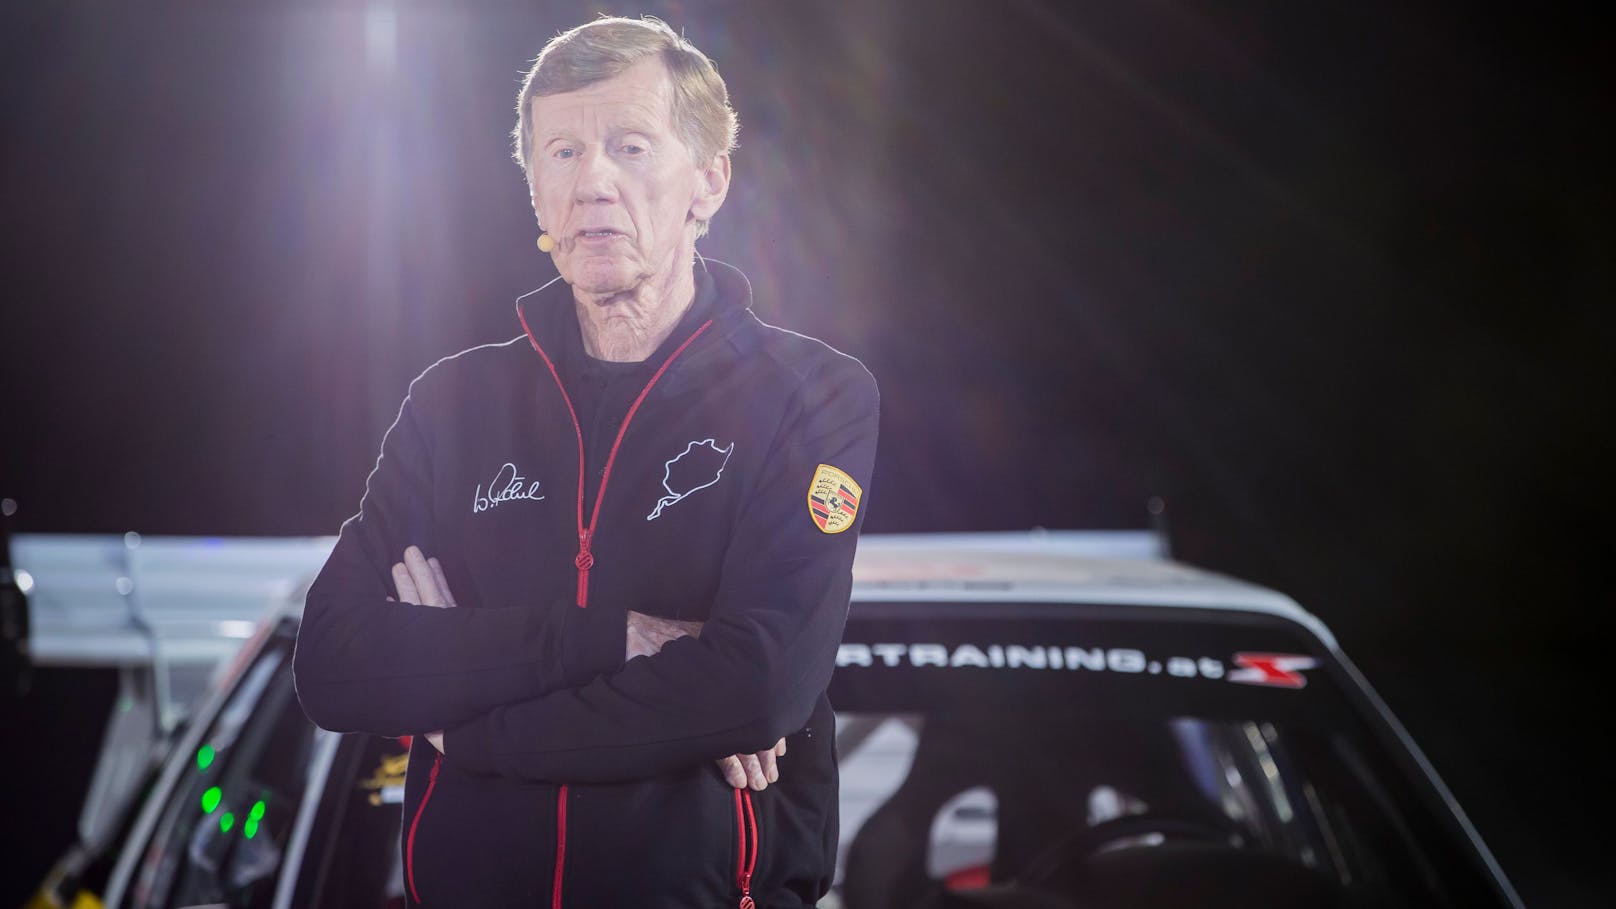 Rallye-Legende: "Formel 1 ist wie Kindergeburtstag"